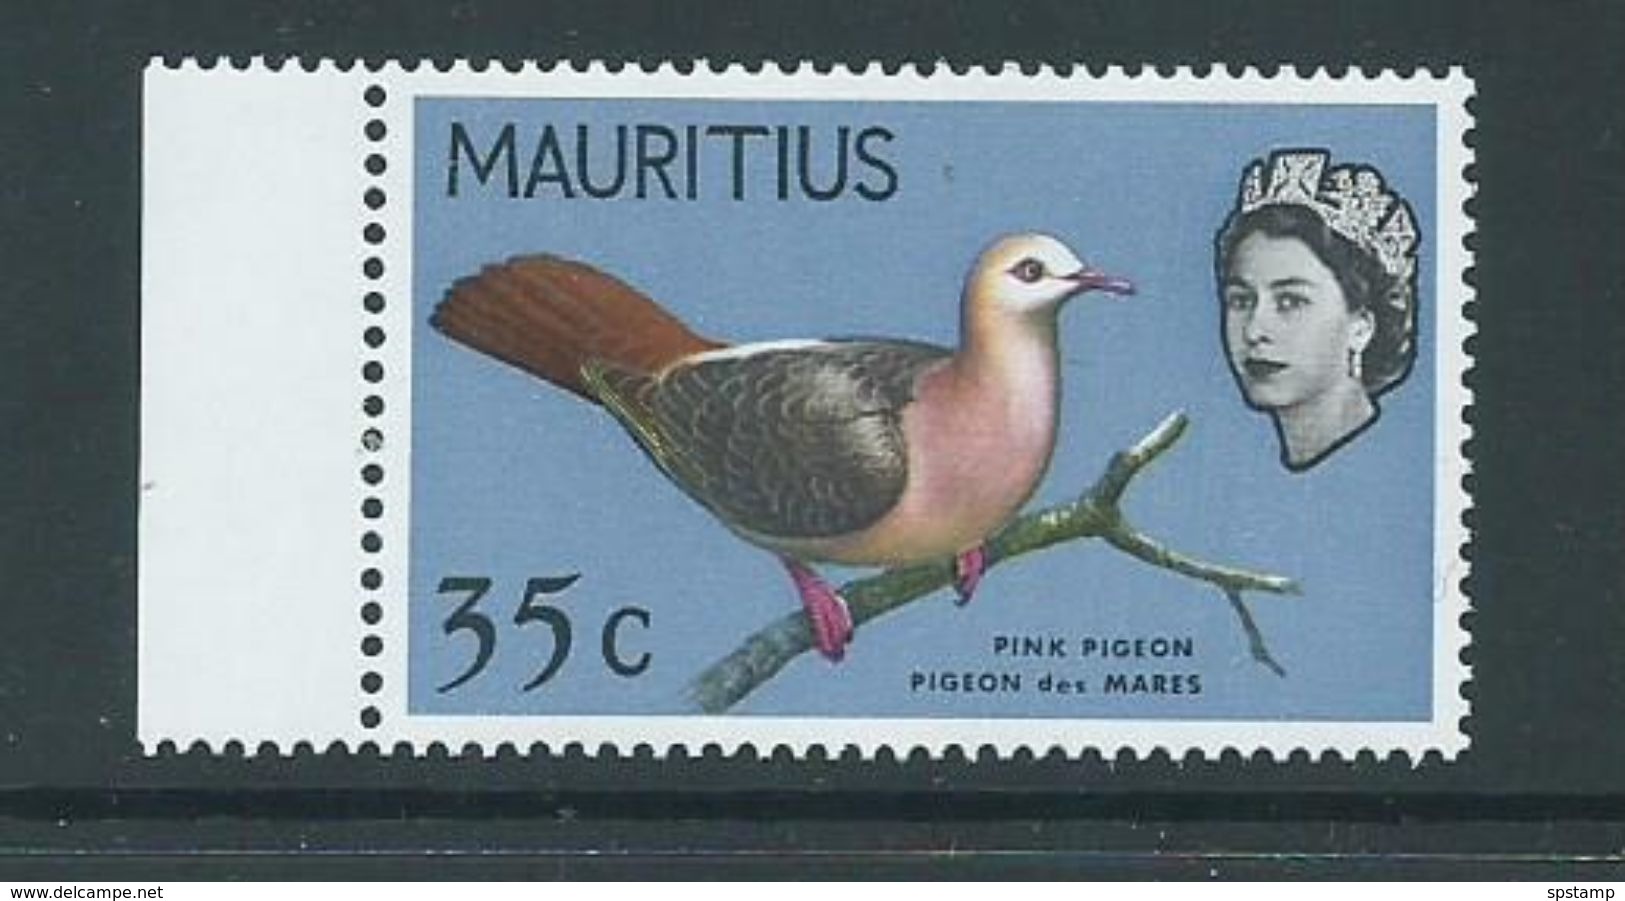 Mauritius 1966 35c Bird Definitives Sideways Watermark MNH - Mauritius (1968-...)